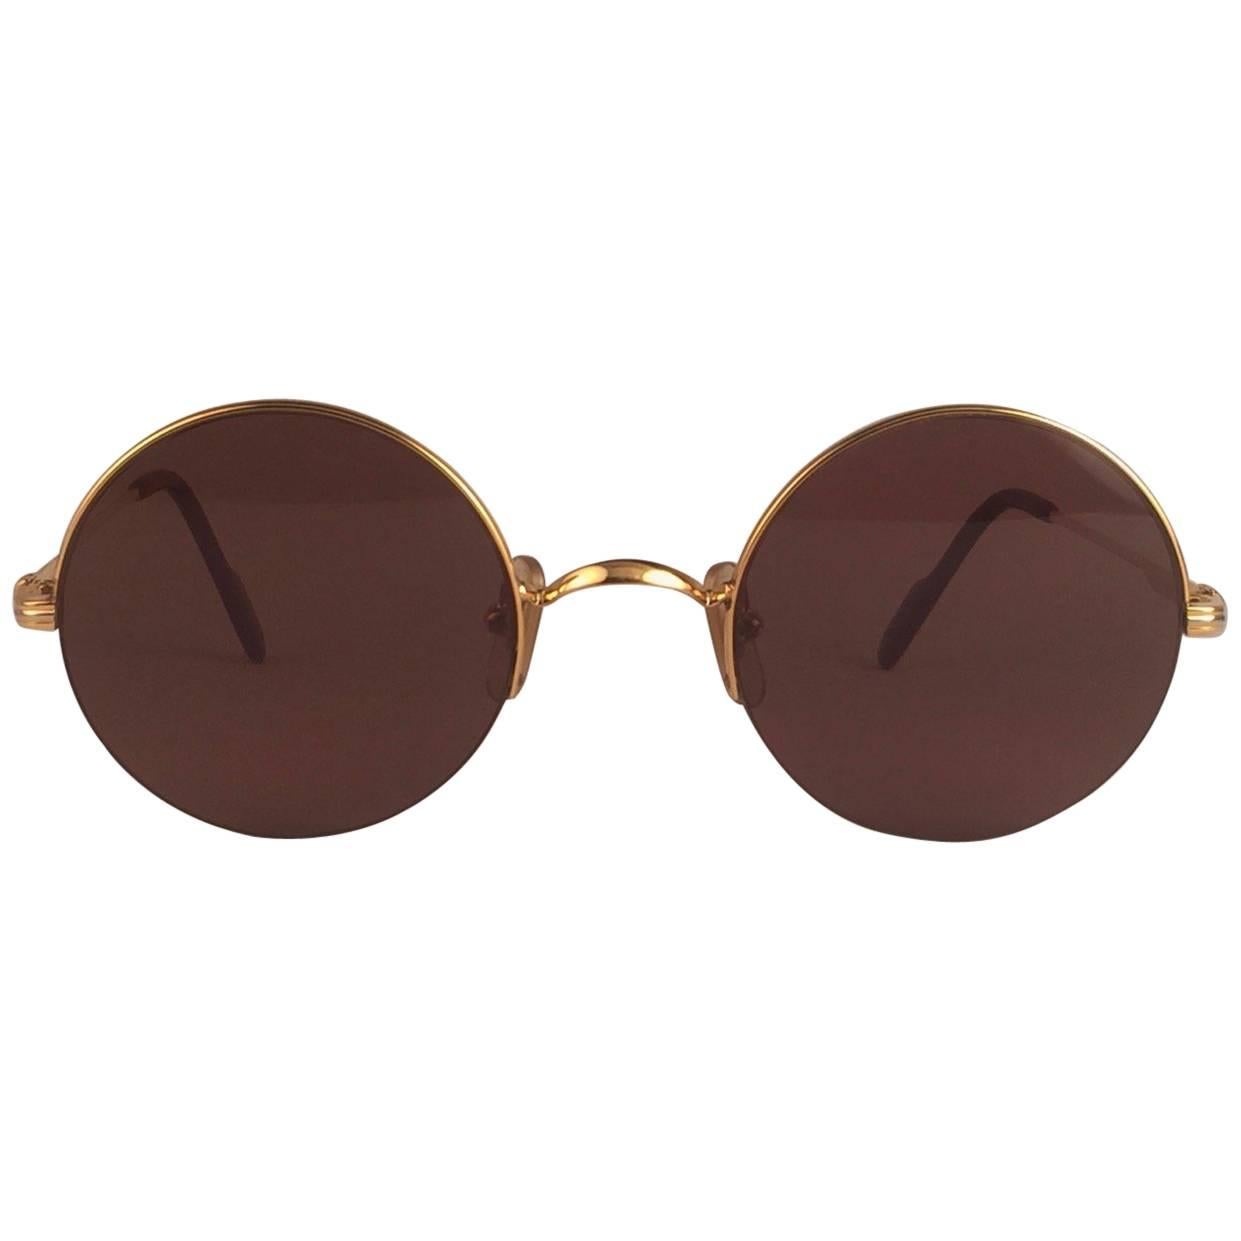 New Cartier Mayfair Round Half Frame Gold 45mm Brown Lens France Sunglasses